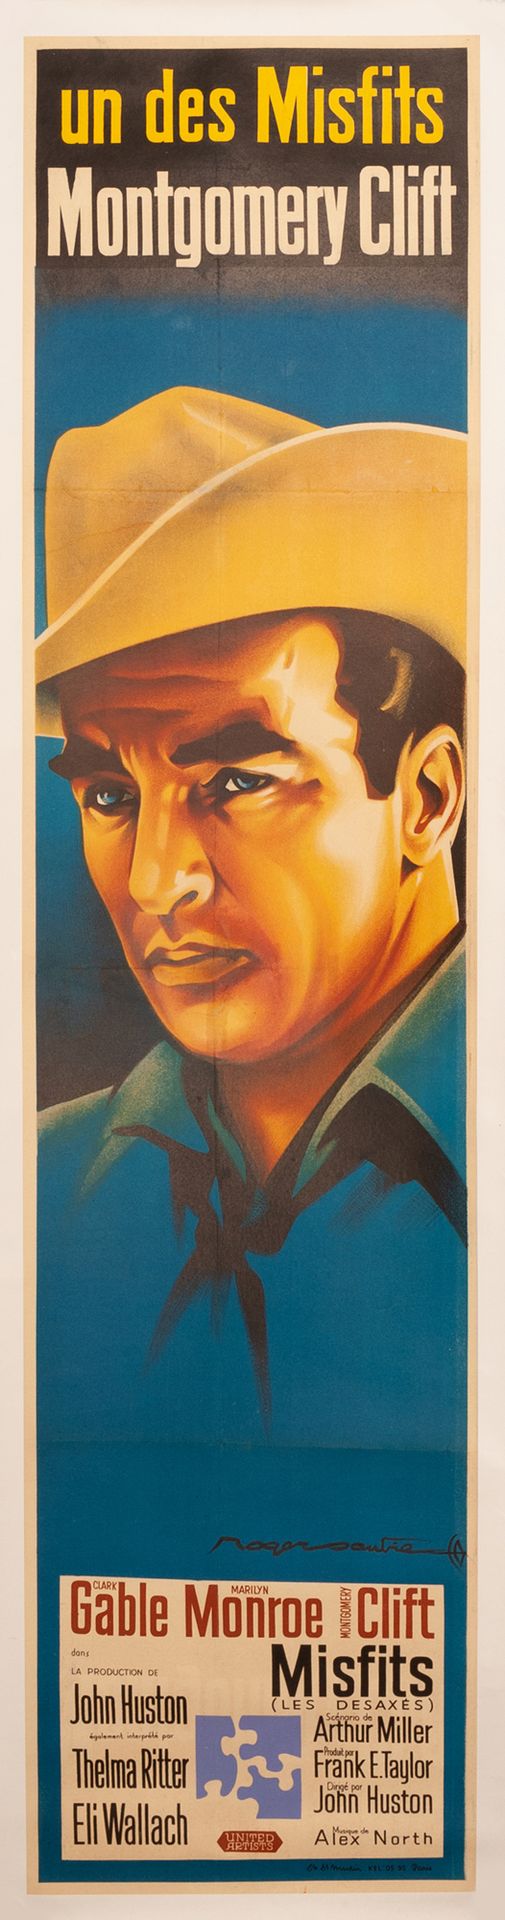 Null LES DESAXÉS / LES MISFITS John Houston. 1961.
40 x 160 cm. French poster. R&hellip;